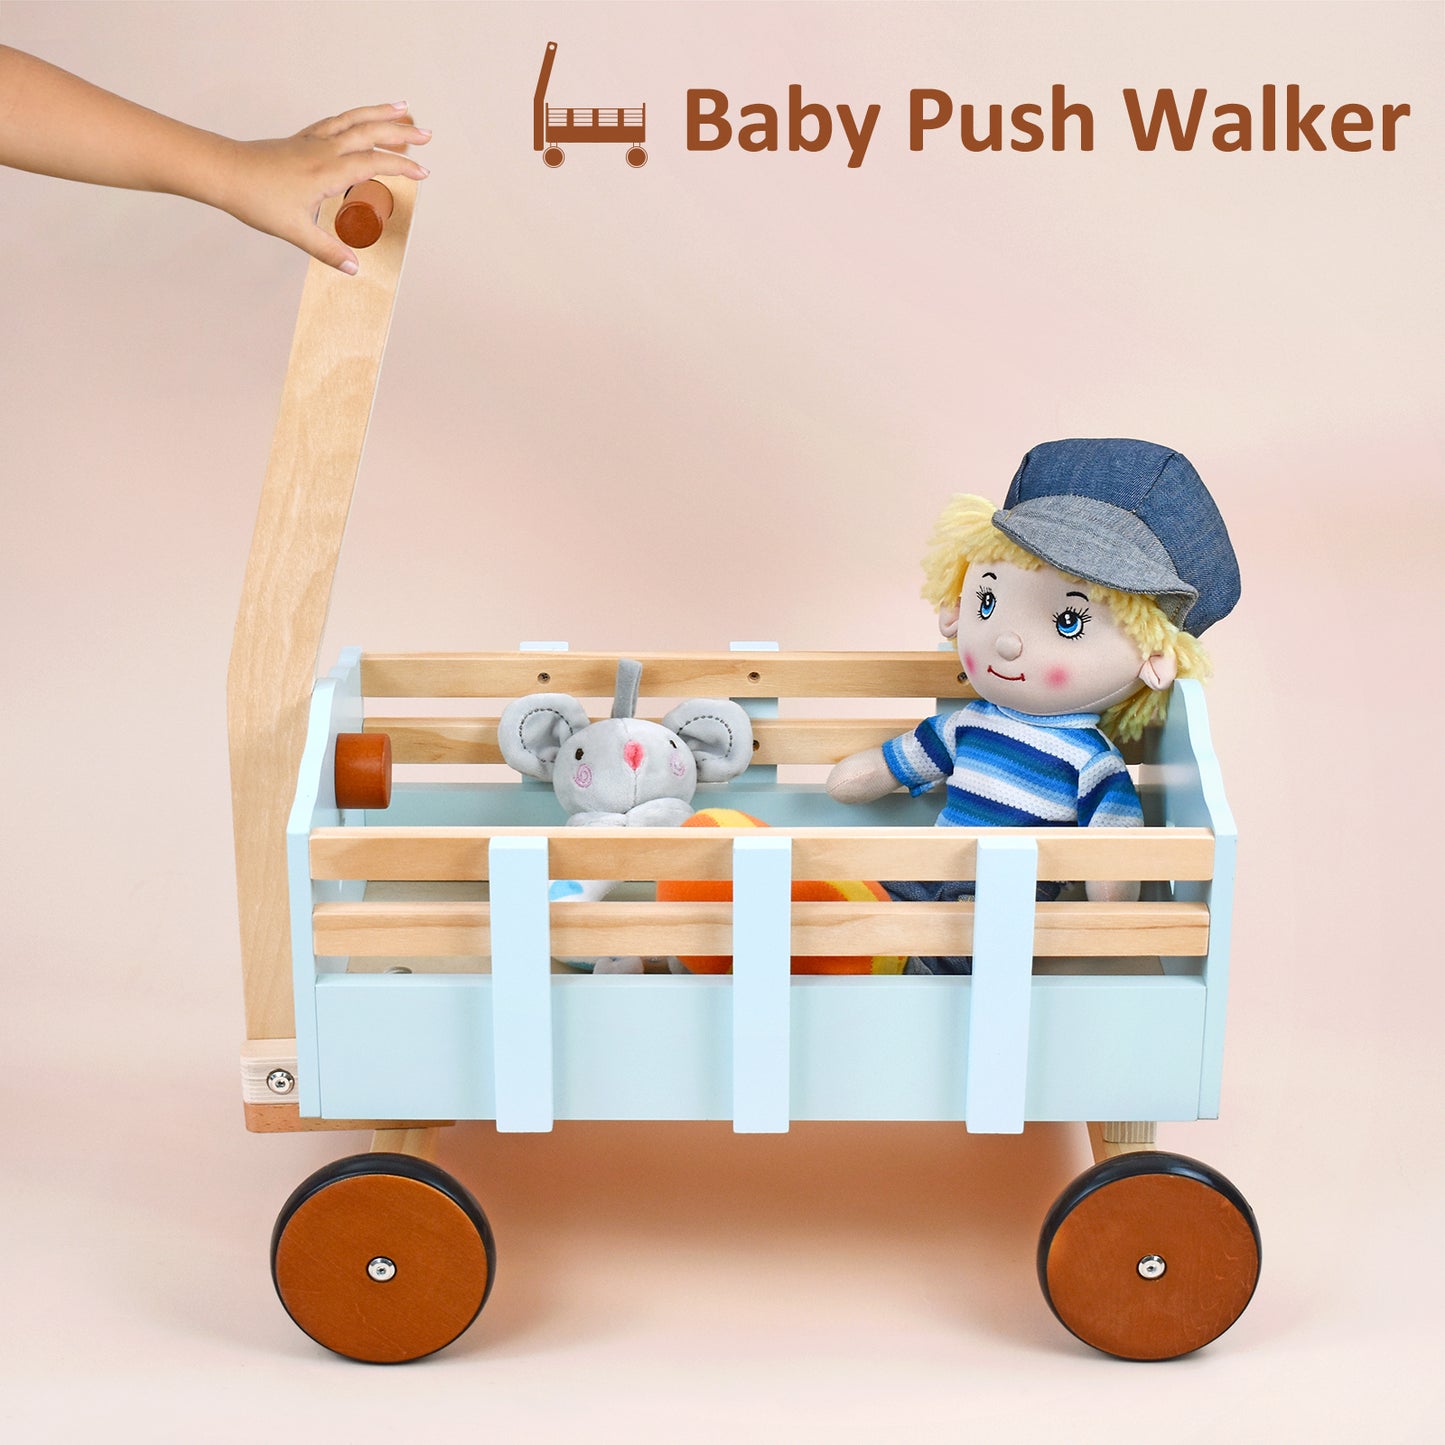 Wooden Toys Cargo Walker Cart Wagon Stroller